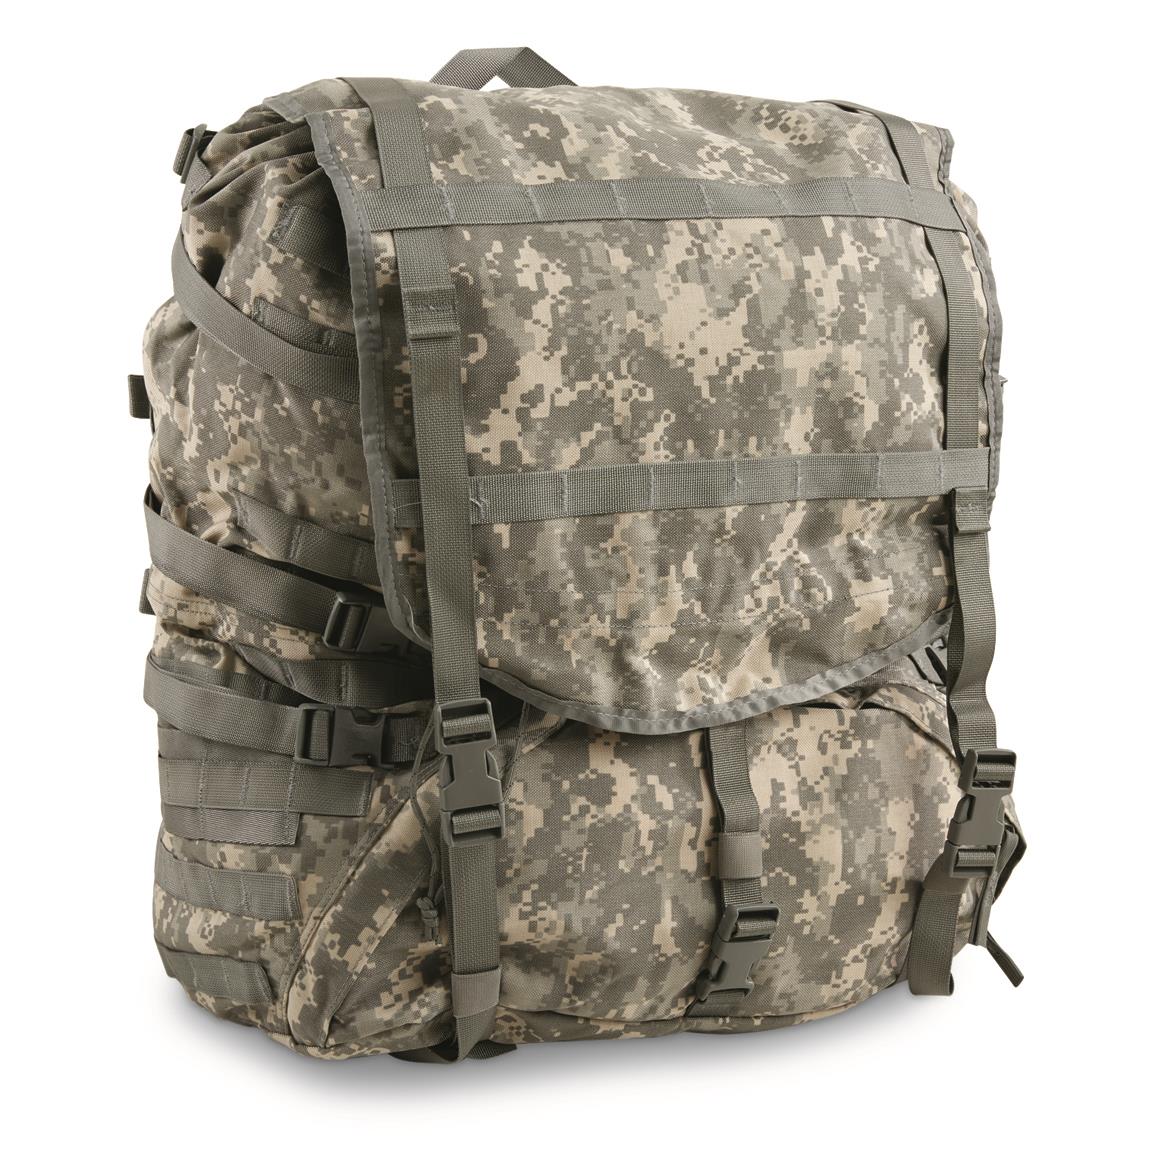 U.S. Military Surplus Large Rucksack, No Straps, New, Army Digital